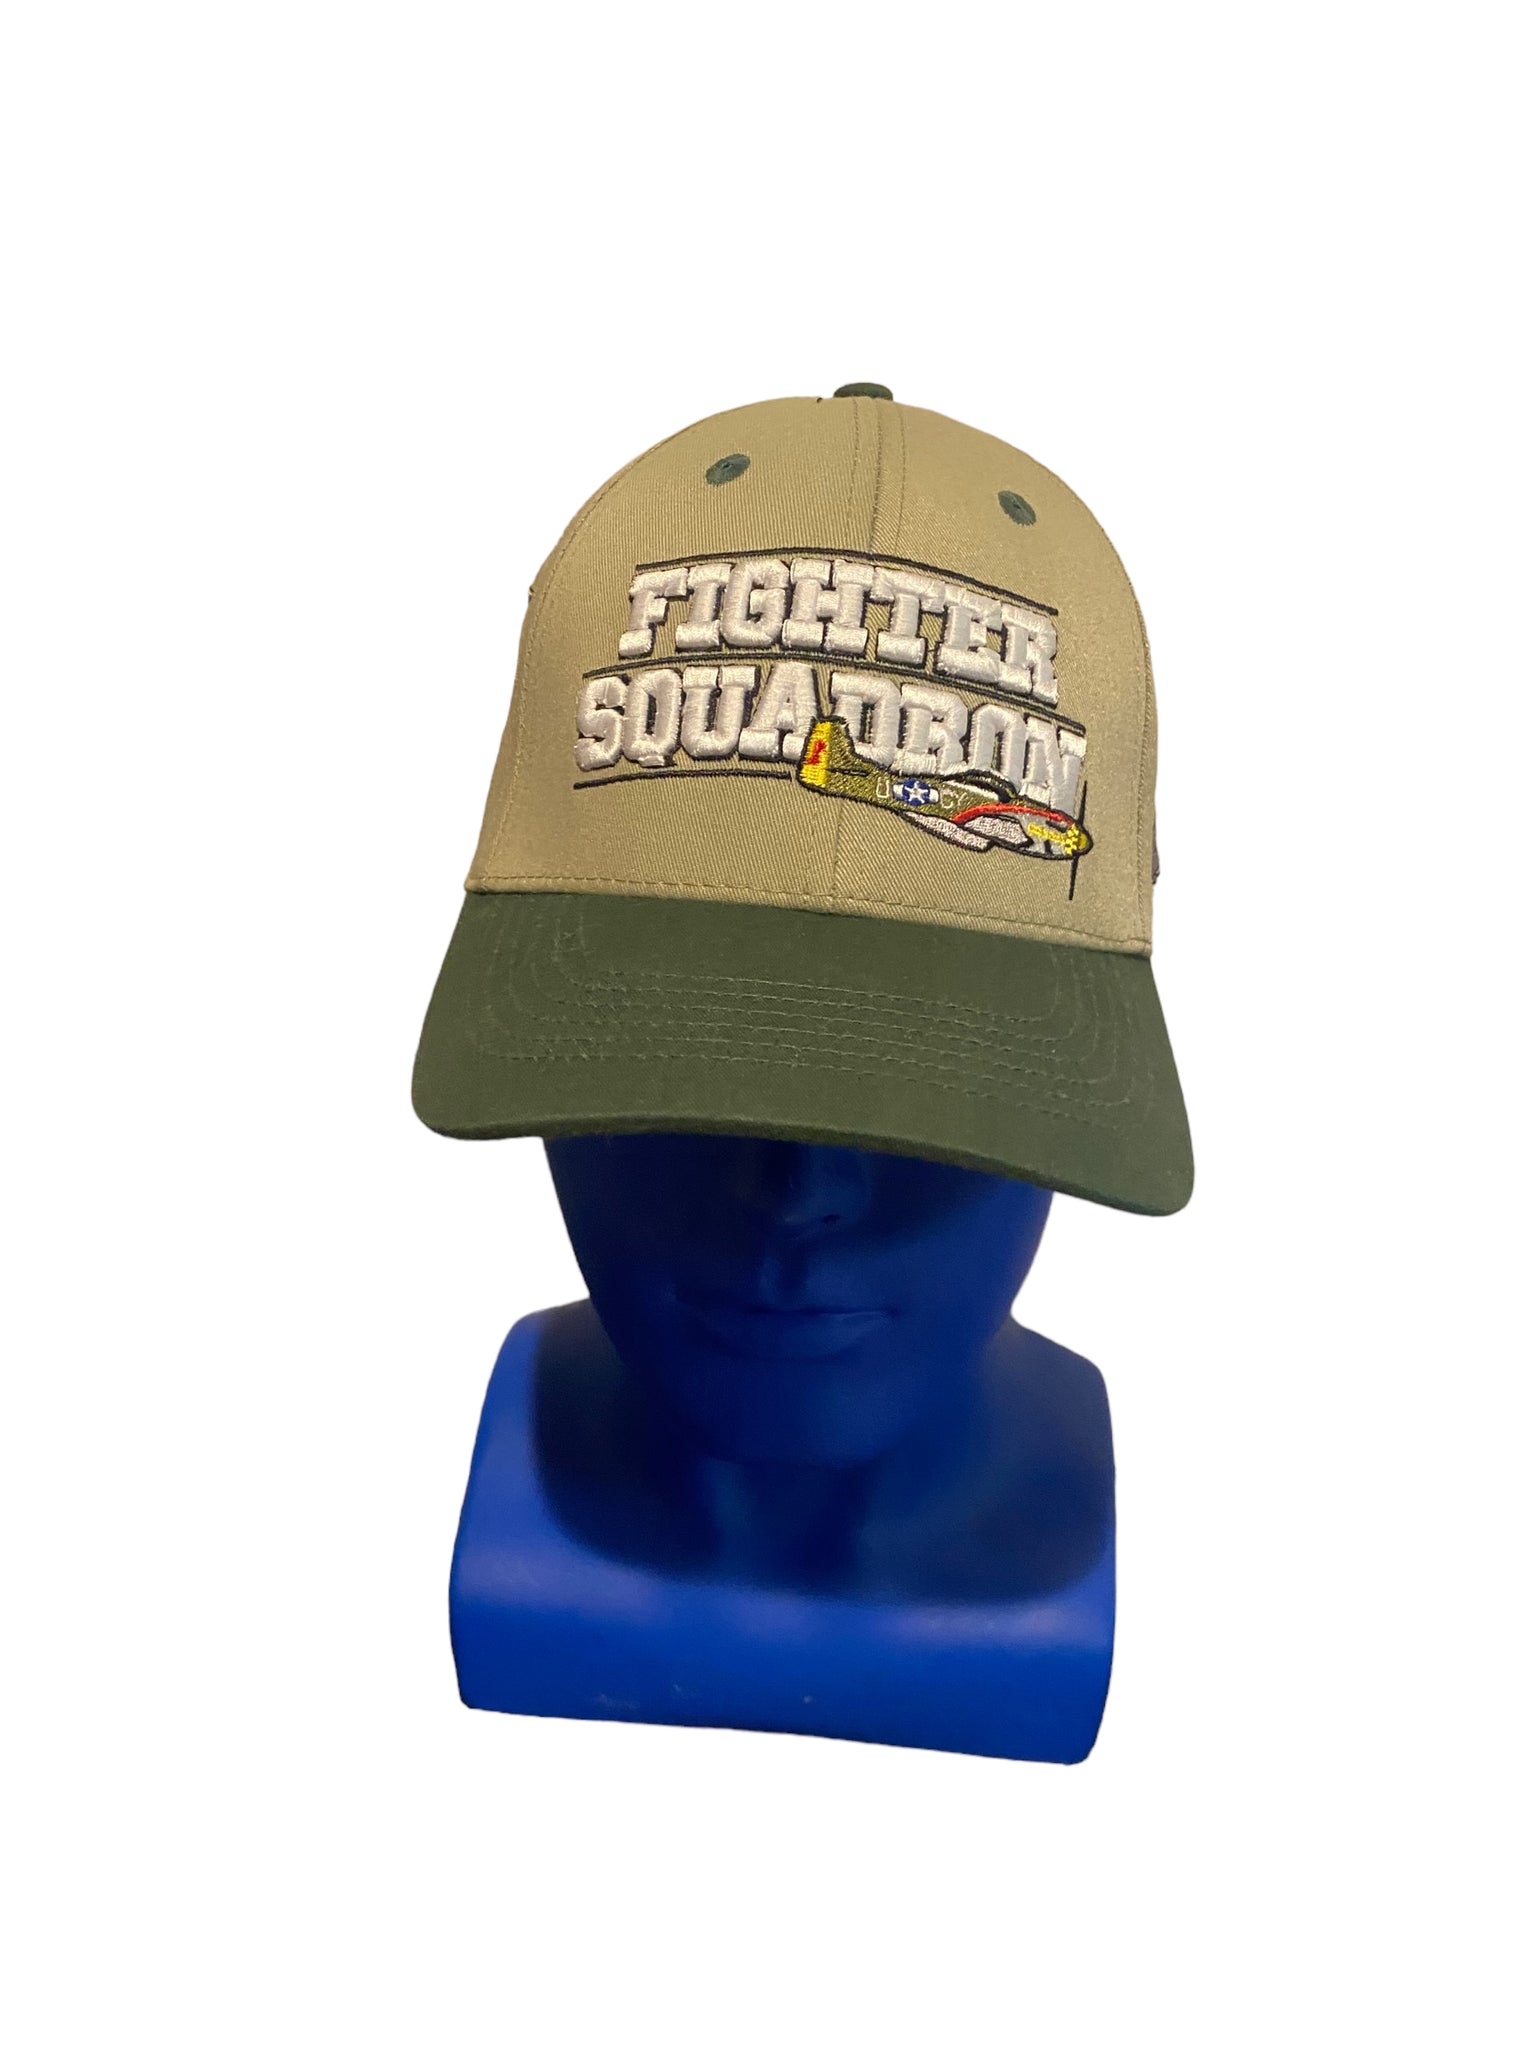 Fighter Squadron Commemorative Air Force Adjustable Hat, Vintage Planes USA Flag